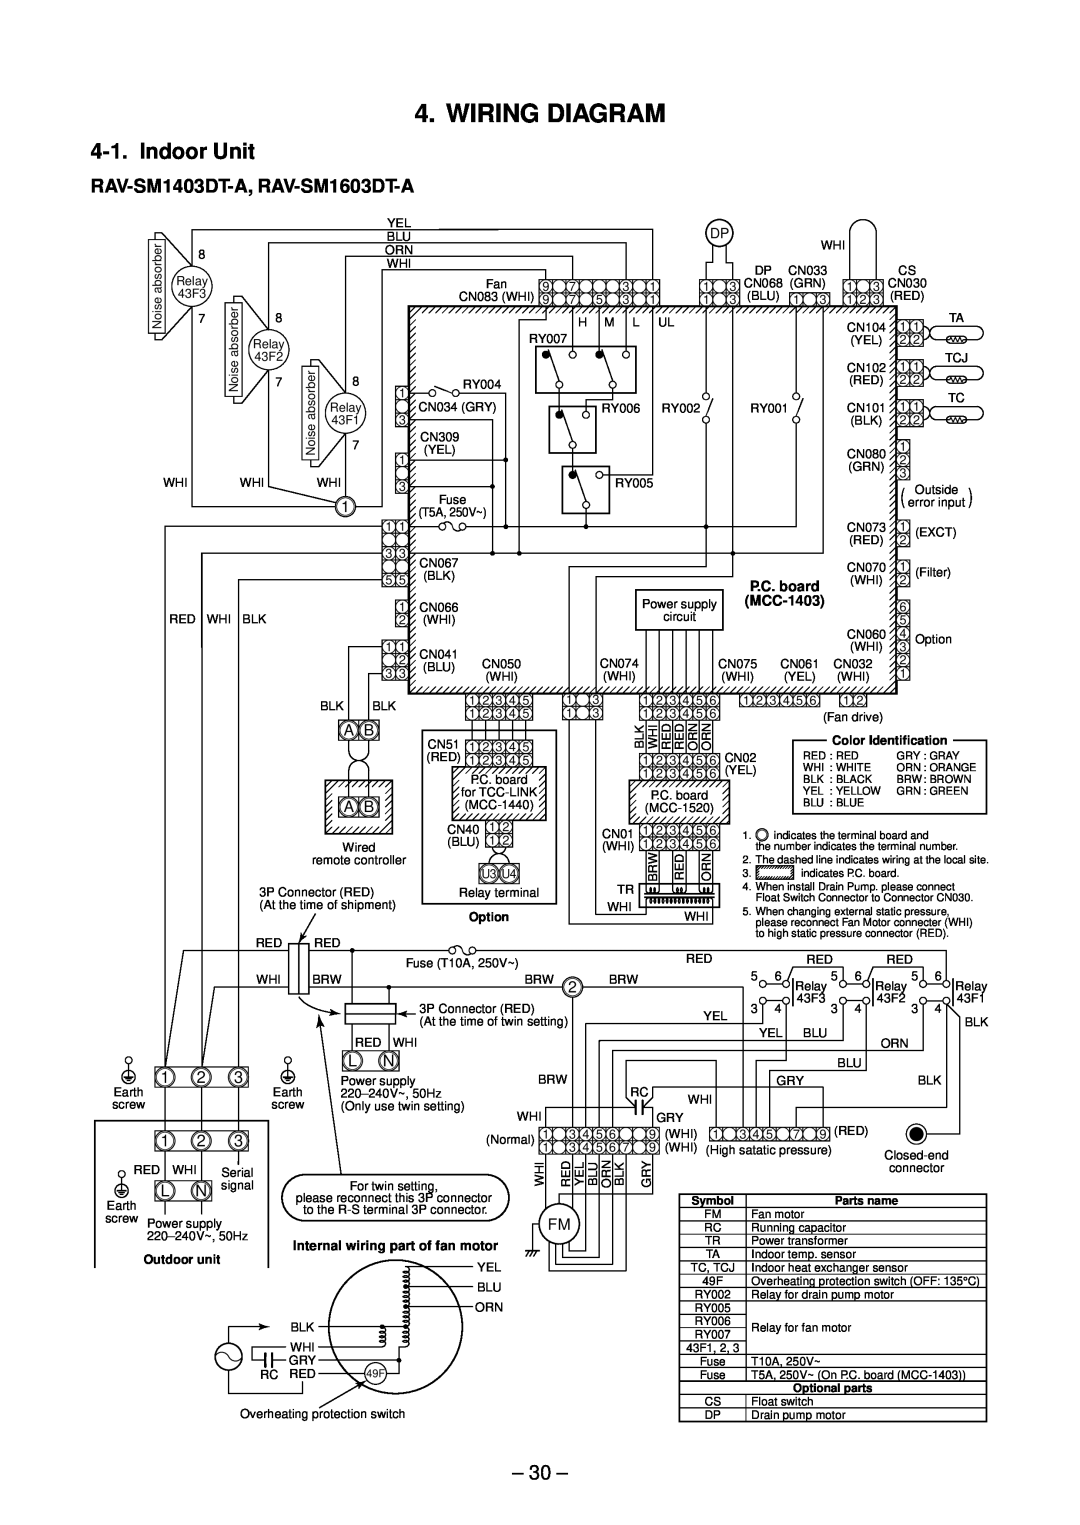 Toshiba RAV-SM1603ATZ-E, RAV-SM1603ATZG-E service manual Wiring Diagram, Indoor Unit, 30, RAV-SM1403DT-A, RAV-SM1603DT-A 